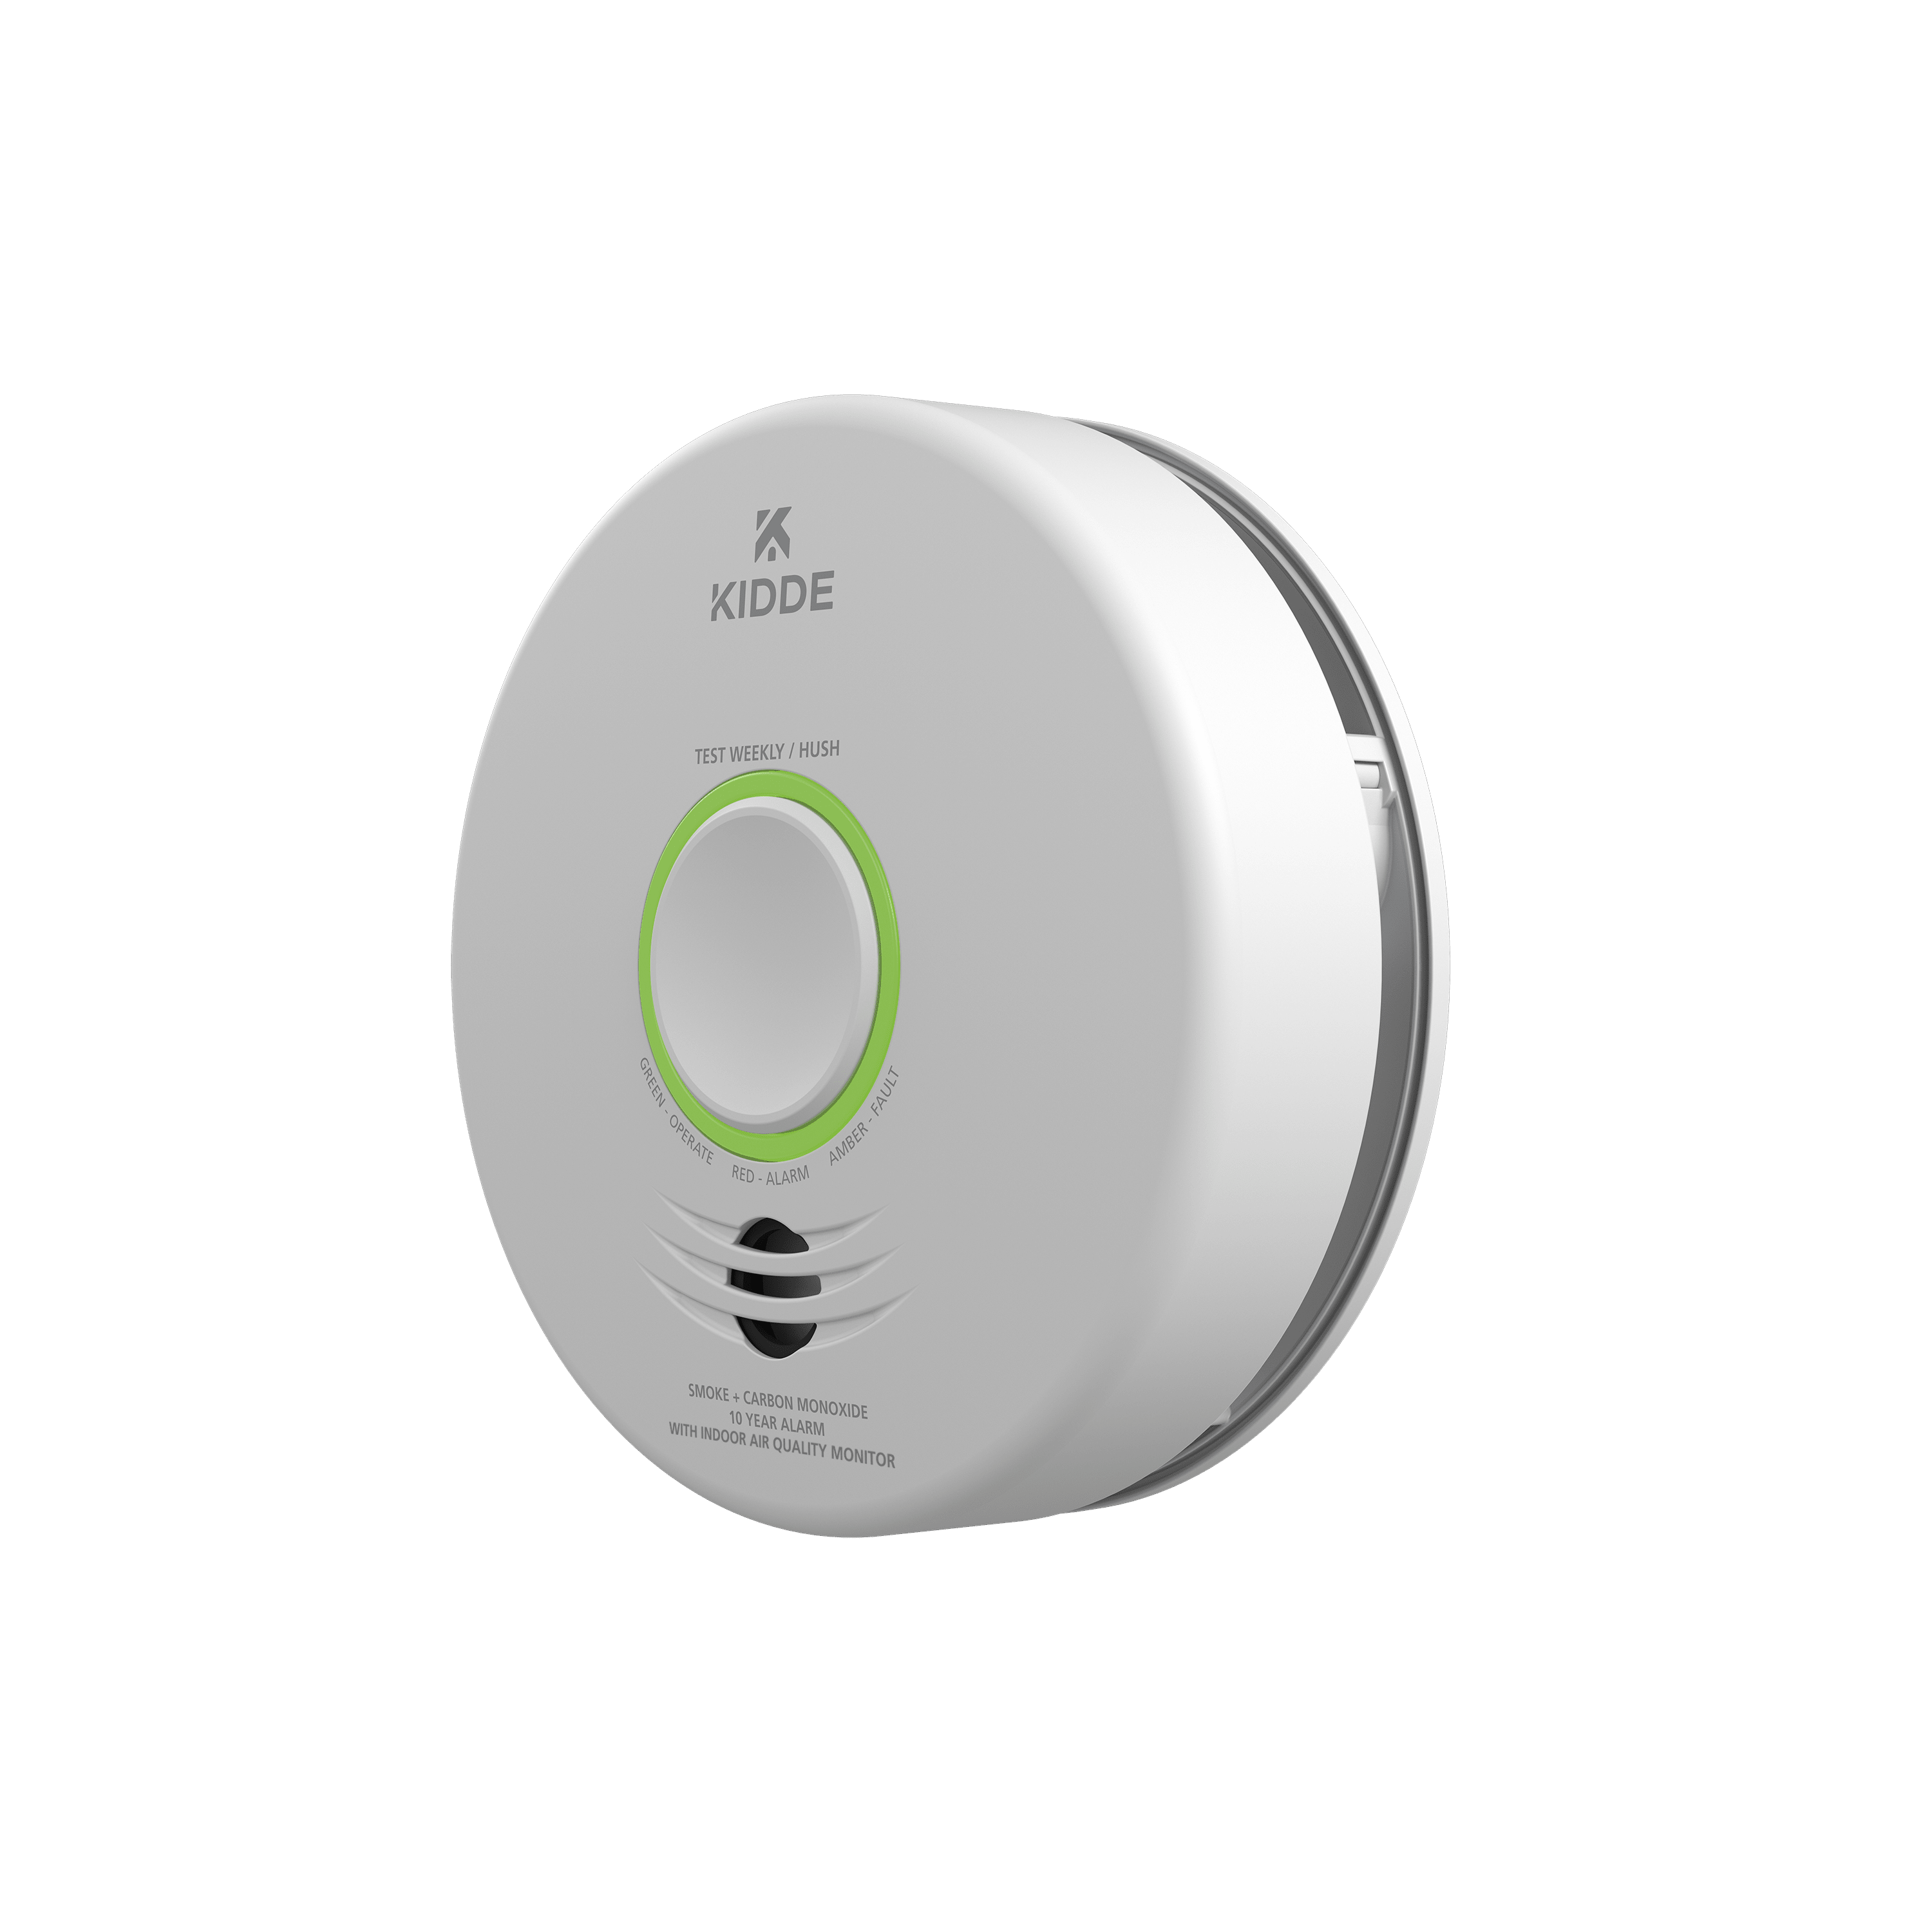 Carbon Monoxide Detectors Portable Temperature Detector/Humidity Sensor/Air  Quality Meter Smoke CO Gas Monitor [3 in 1] Alarm for Home Bedroom Office